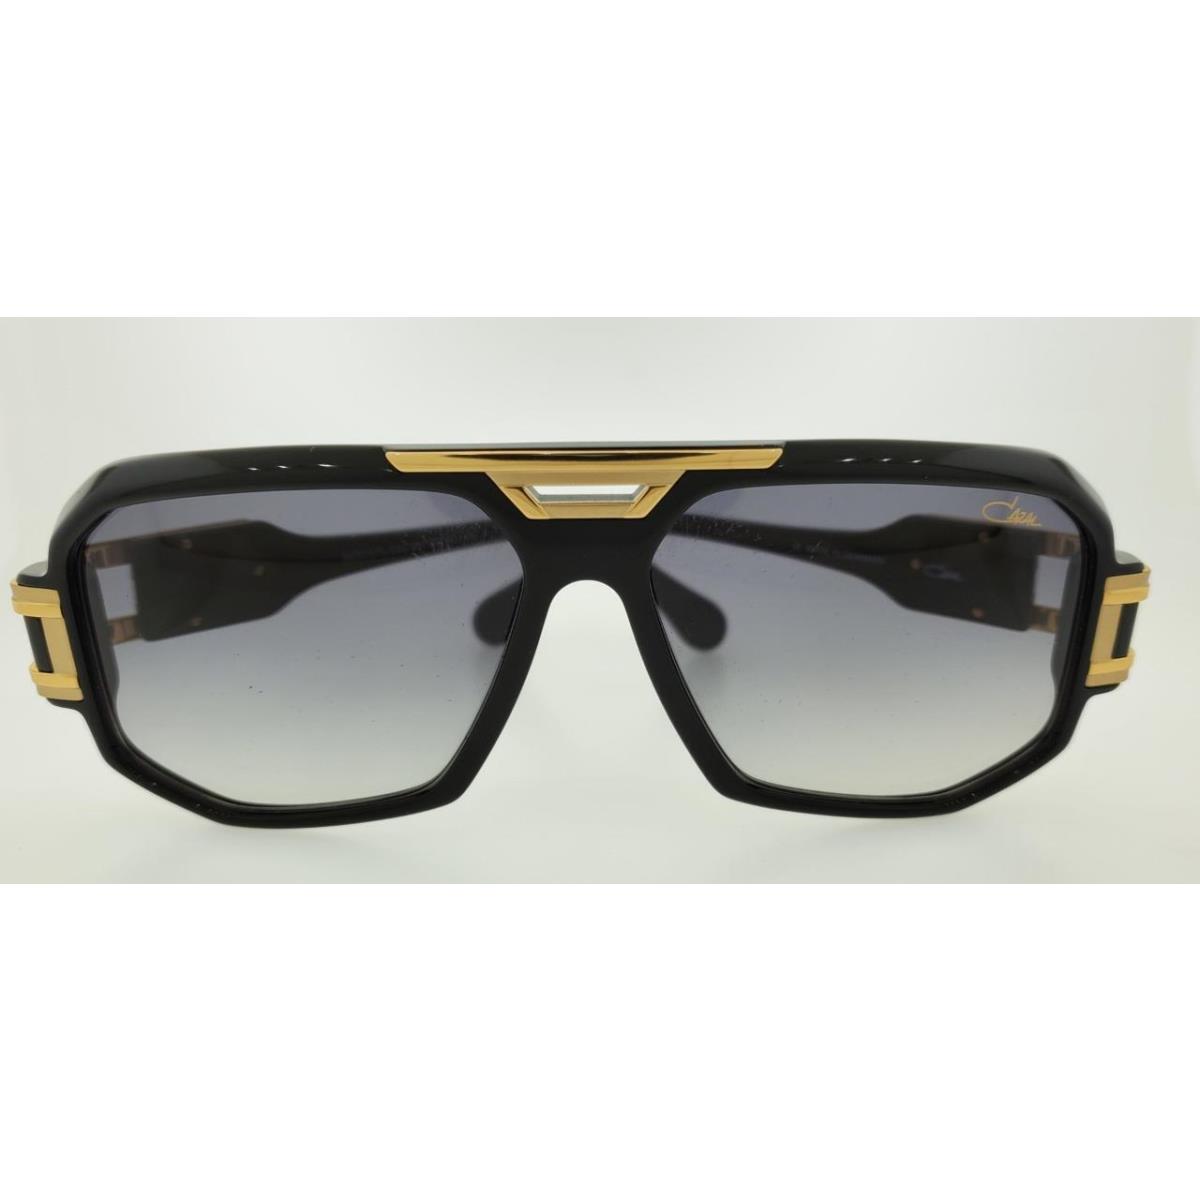 Cazal Sunglasses 675 001 60MM Black Gold Frame with Grey Gradient Lenses